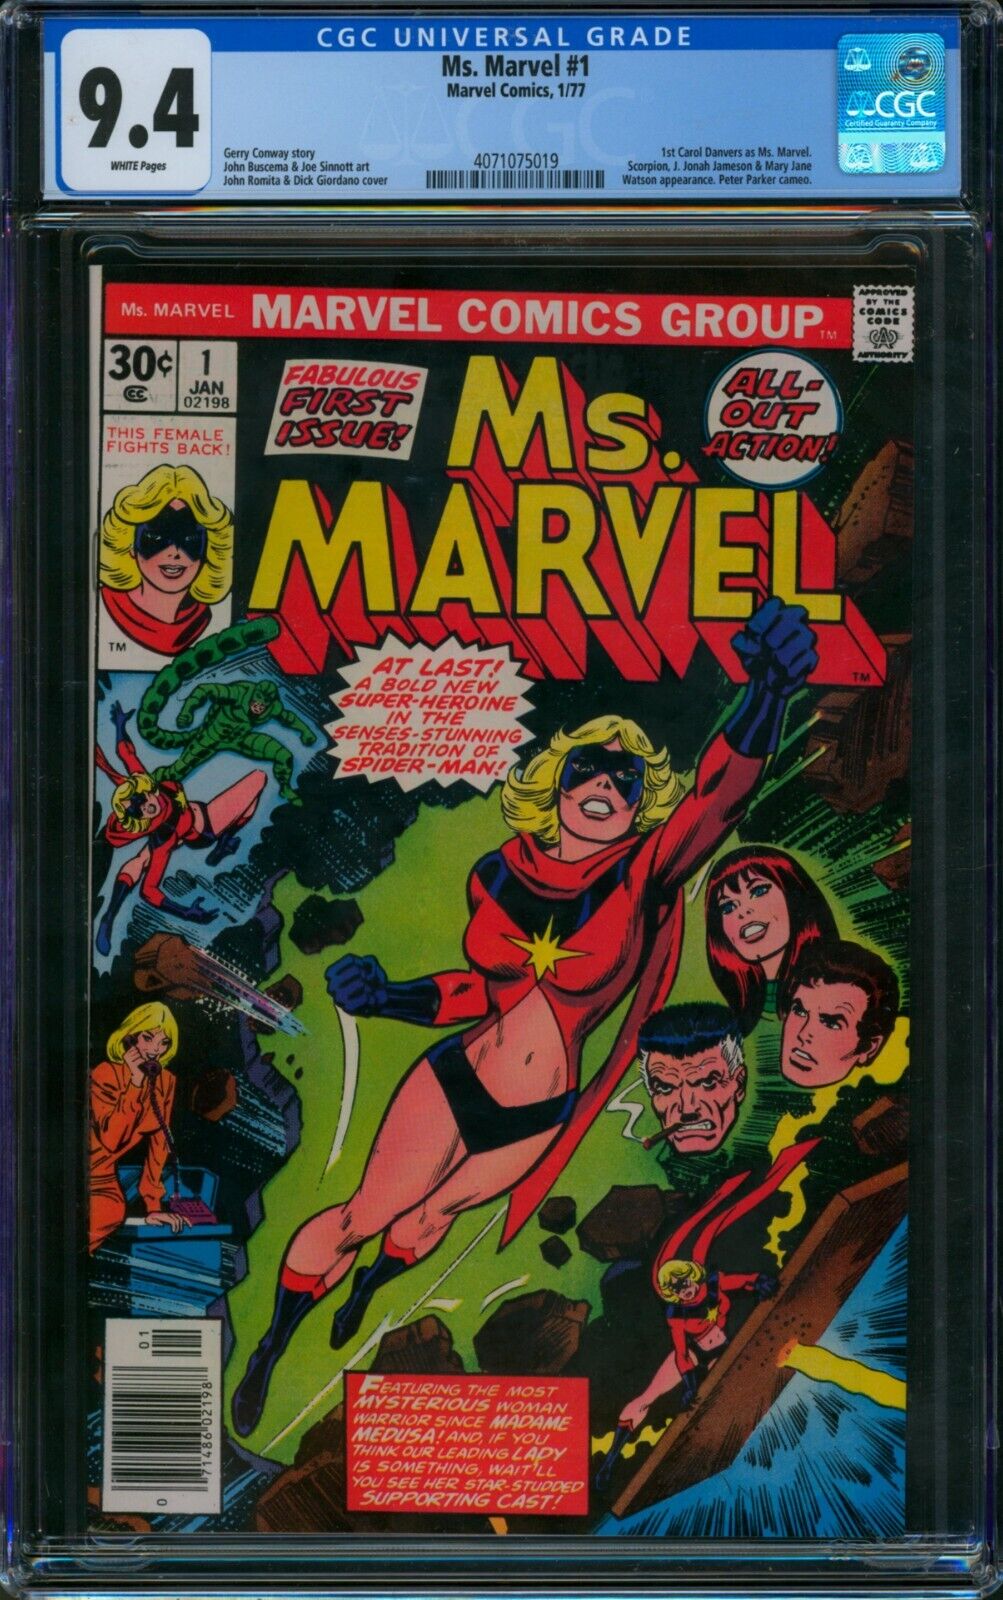 Ms. Marvel #1 ❄️ CGC 9.4 WHITE PGs ❄️ 1st Carol Danvers as Ms Marvel Comic 1977